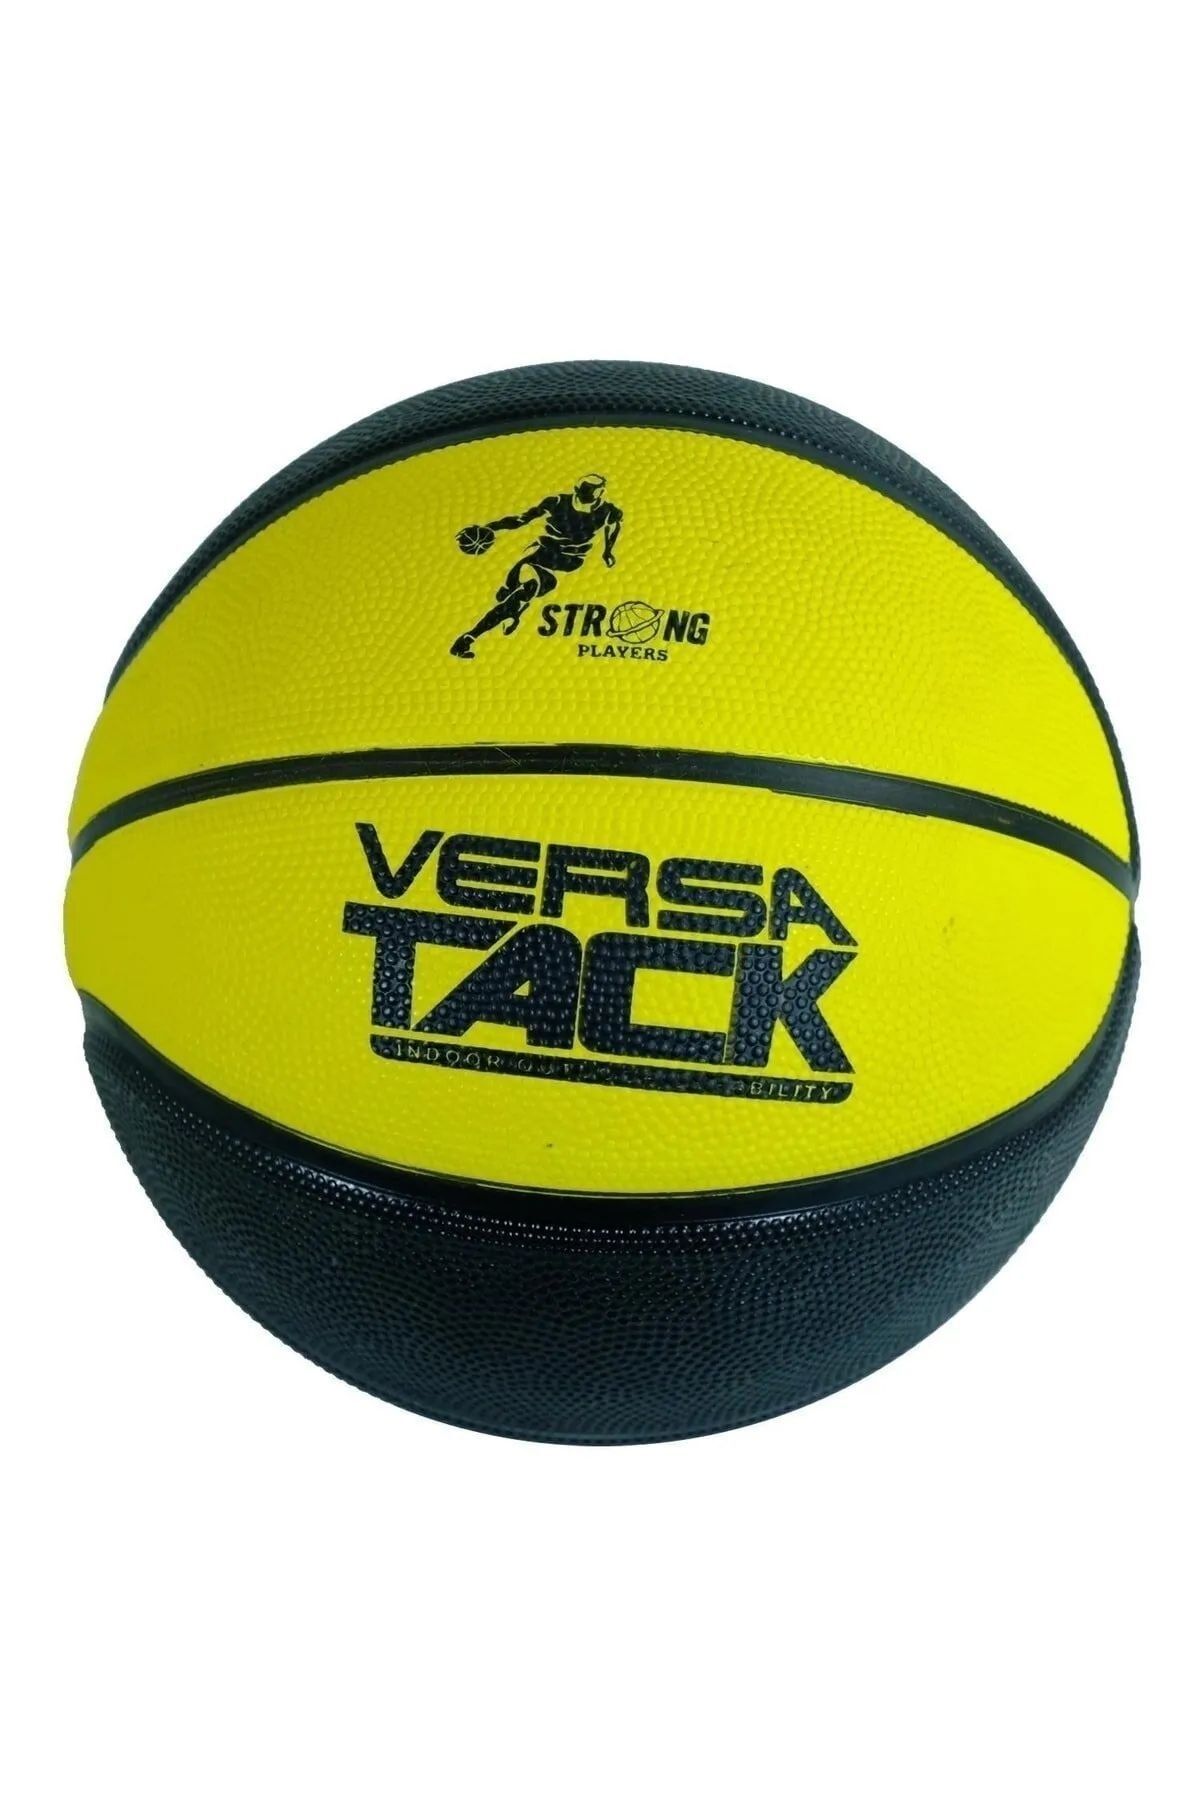 cagdaskids Versa Tack Basketbol Topu